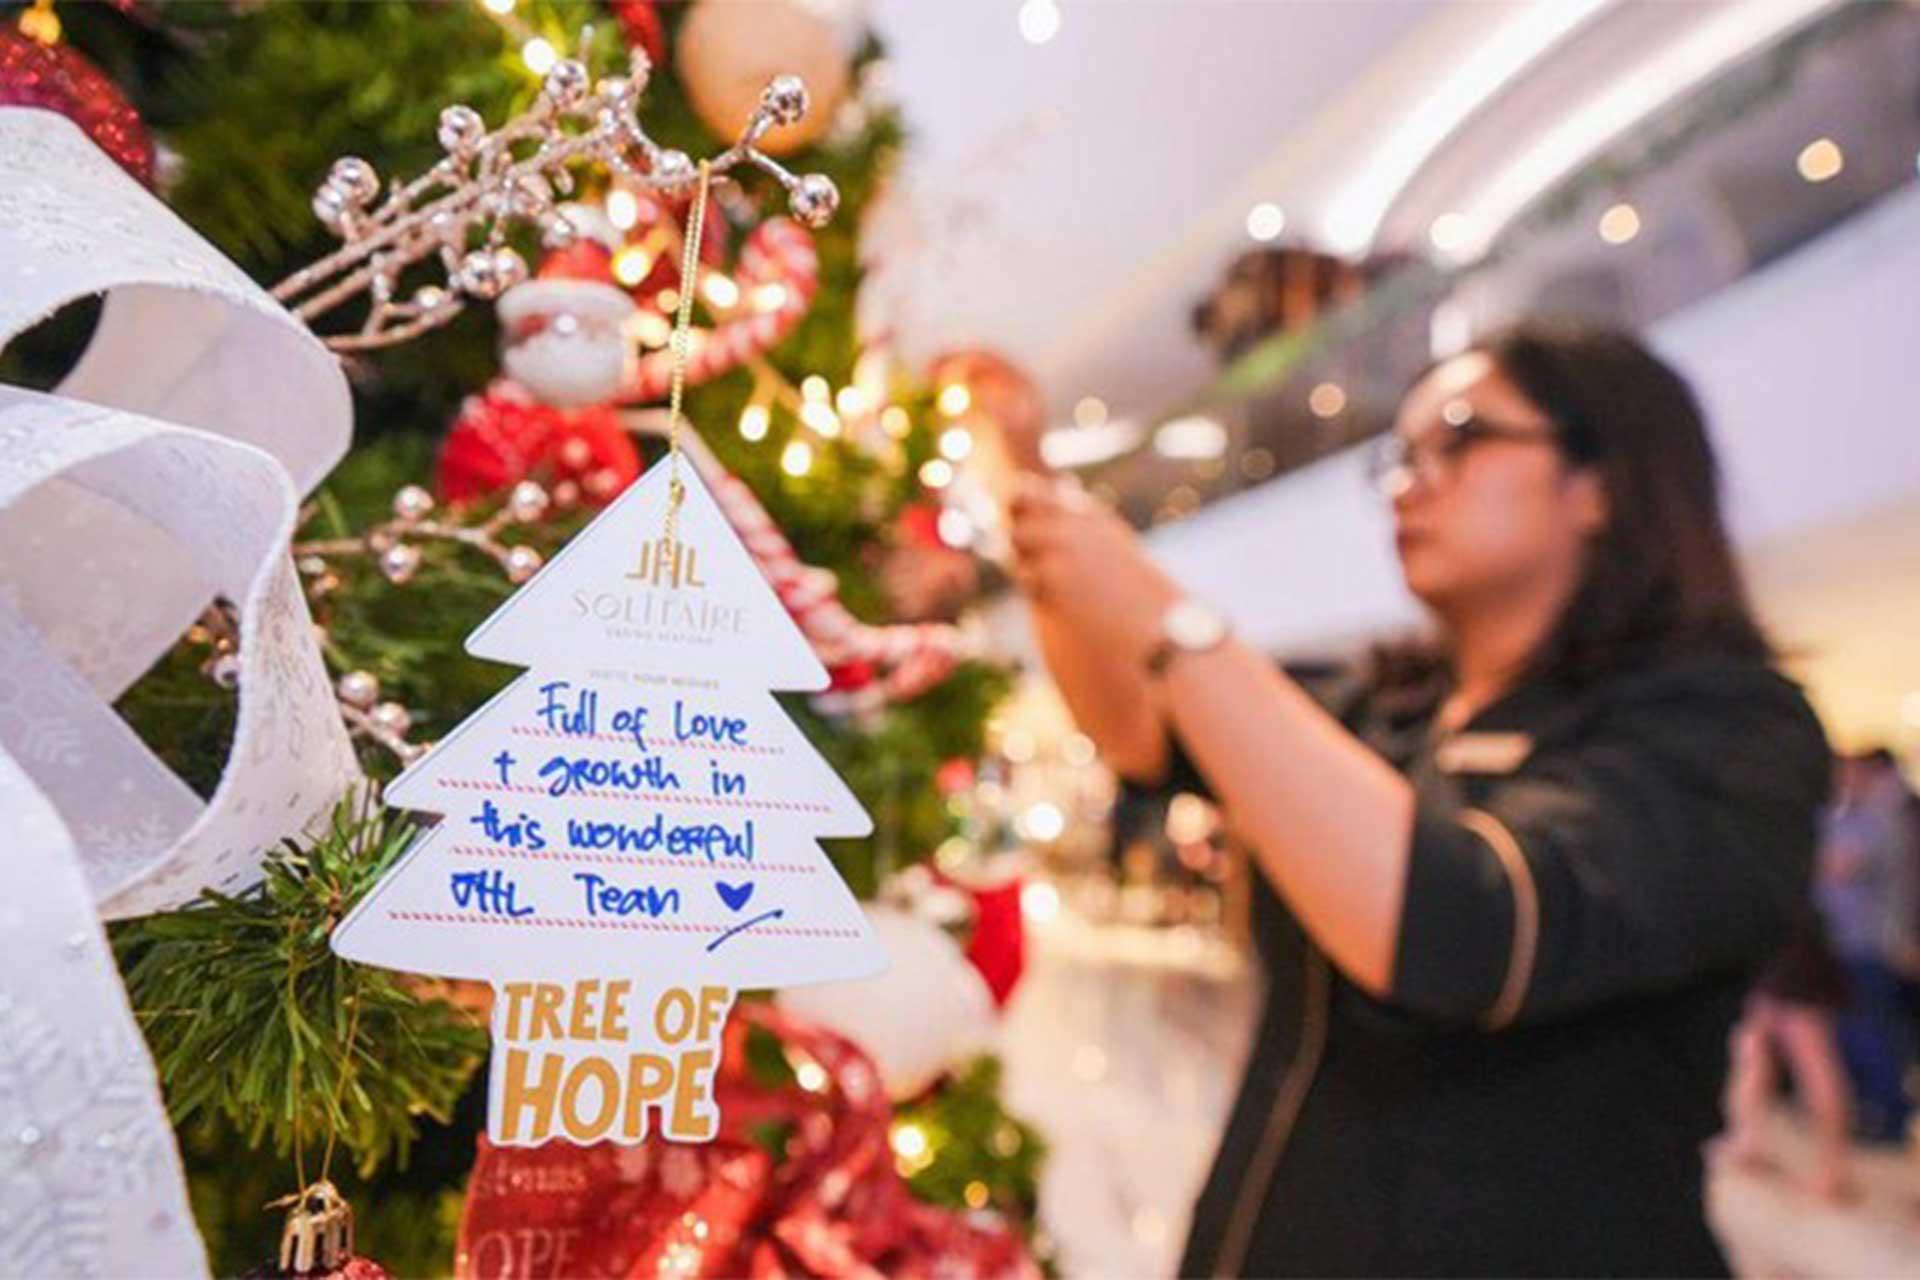 Intip Tradisi Tree Lighting hingga Tree of Hope Jelang Perayaan Natal di Tangerang